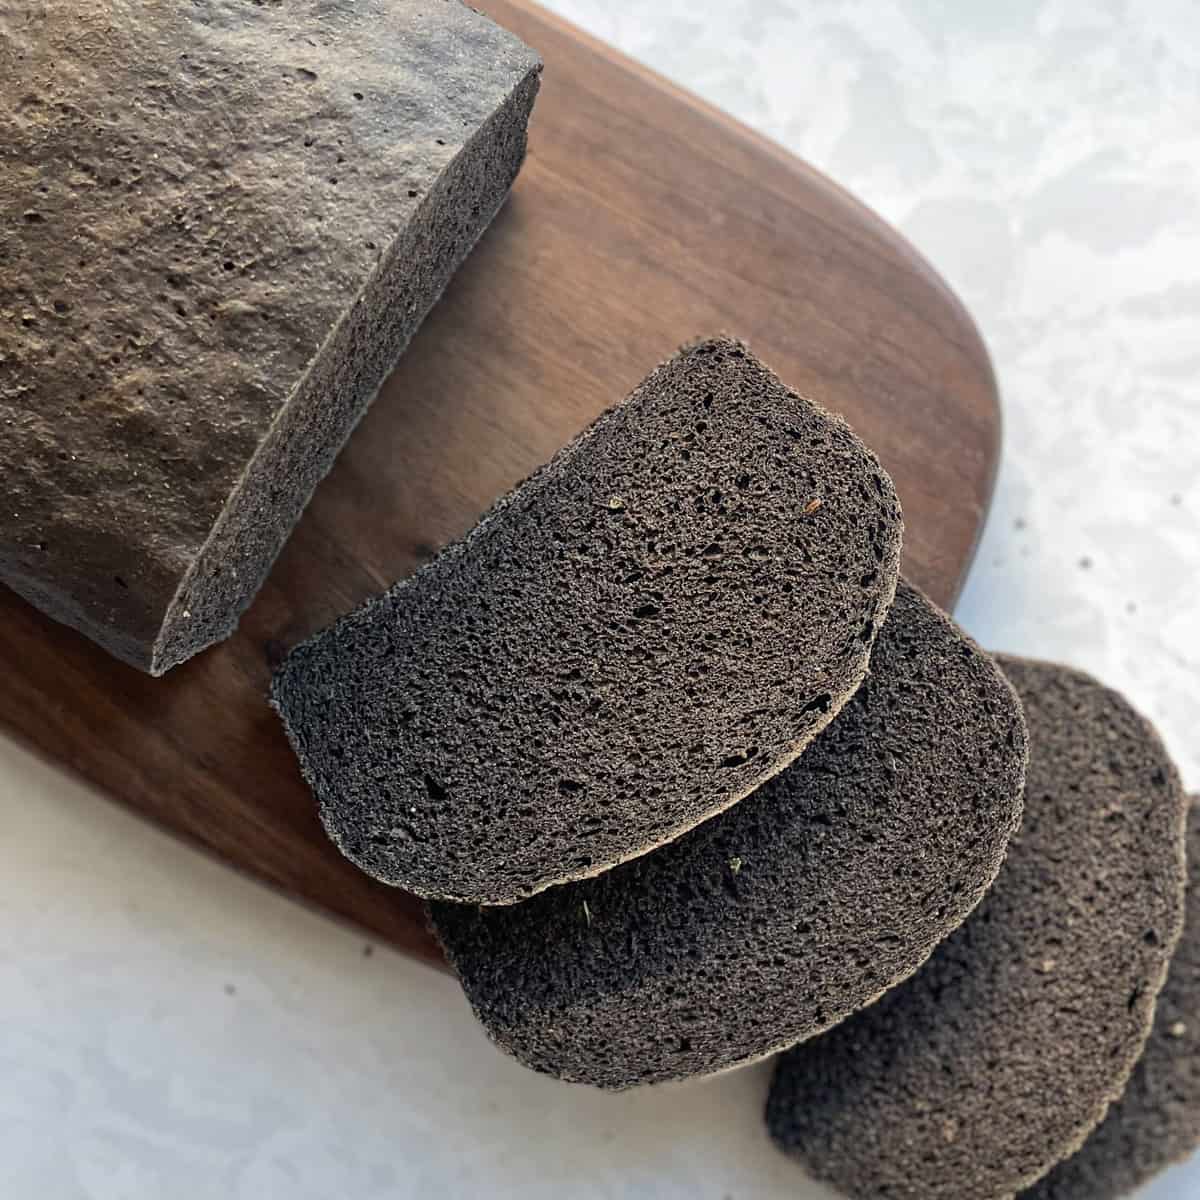 sliced loaf of black russian rye bread on a cutting board.